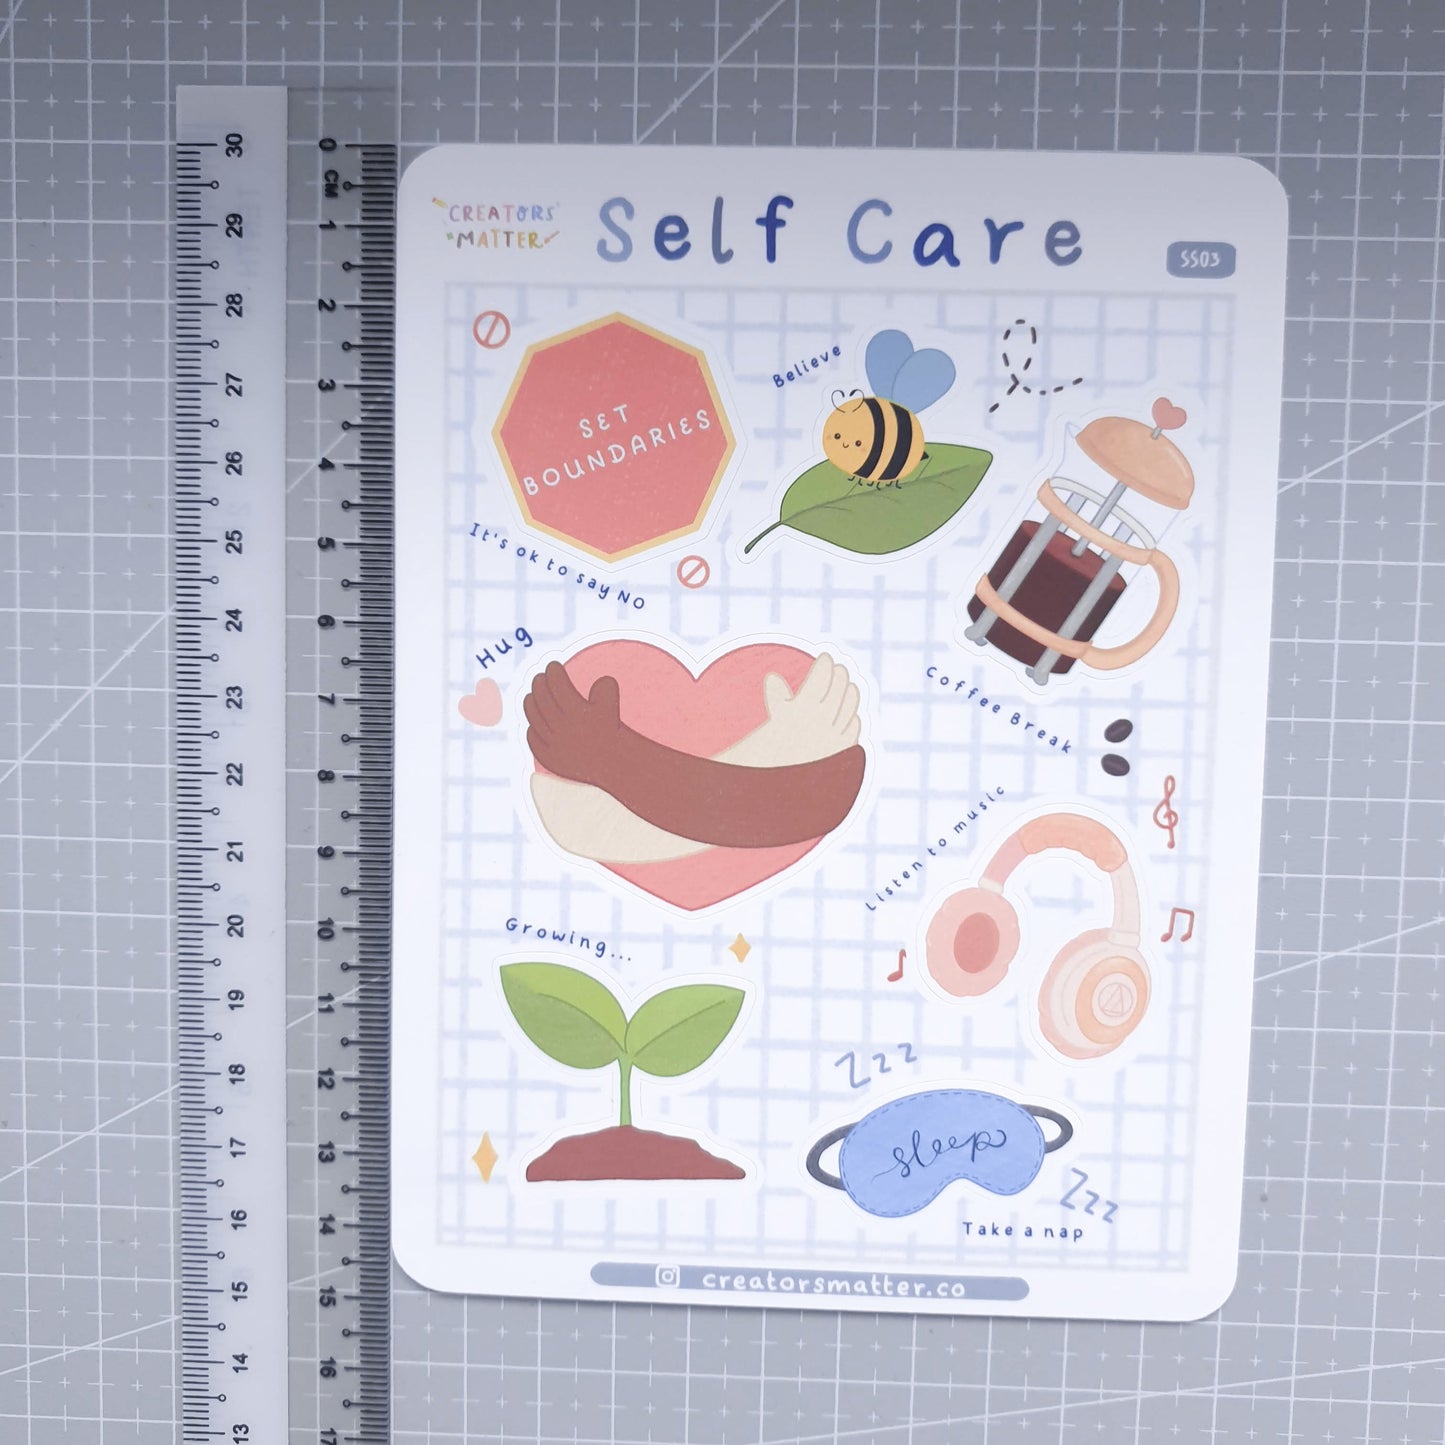 Creators Matter | Self Care Sticker Sheet